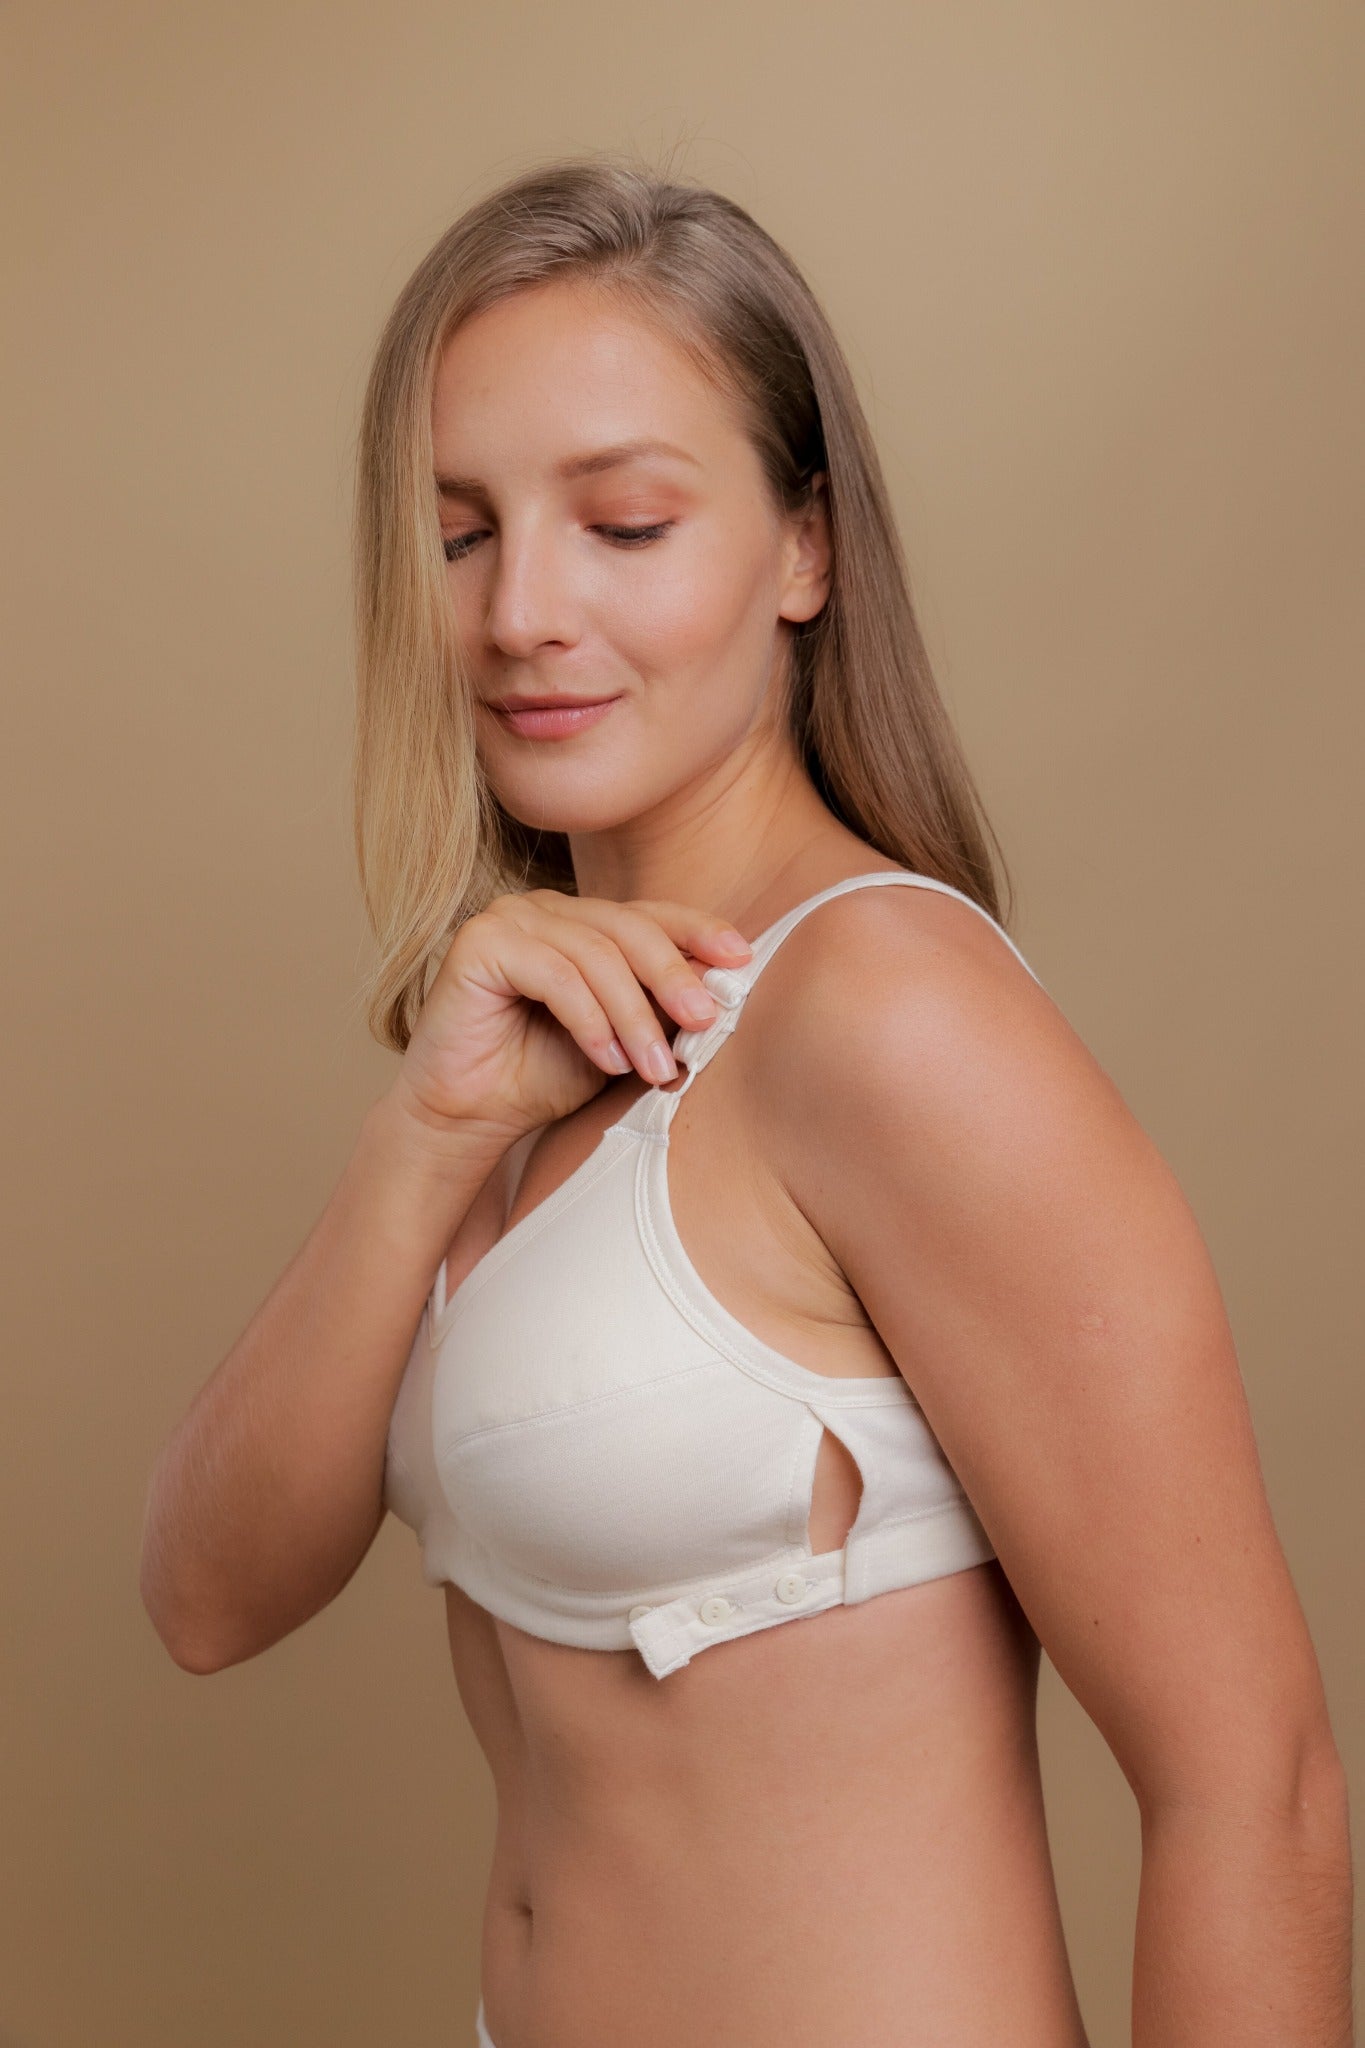 Cotton bra with adjustable straps